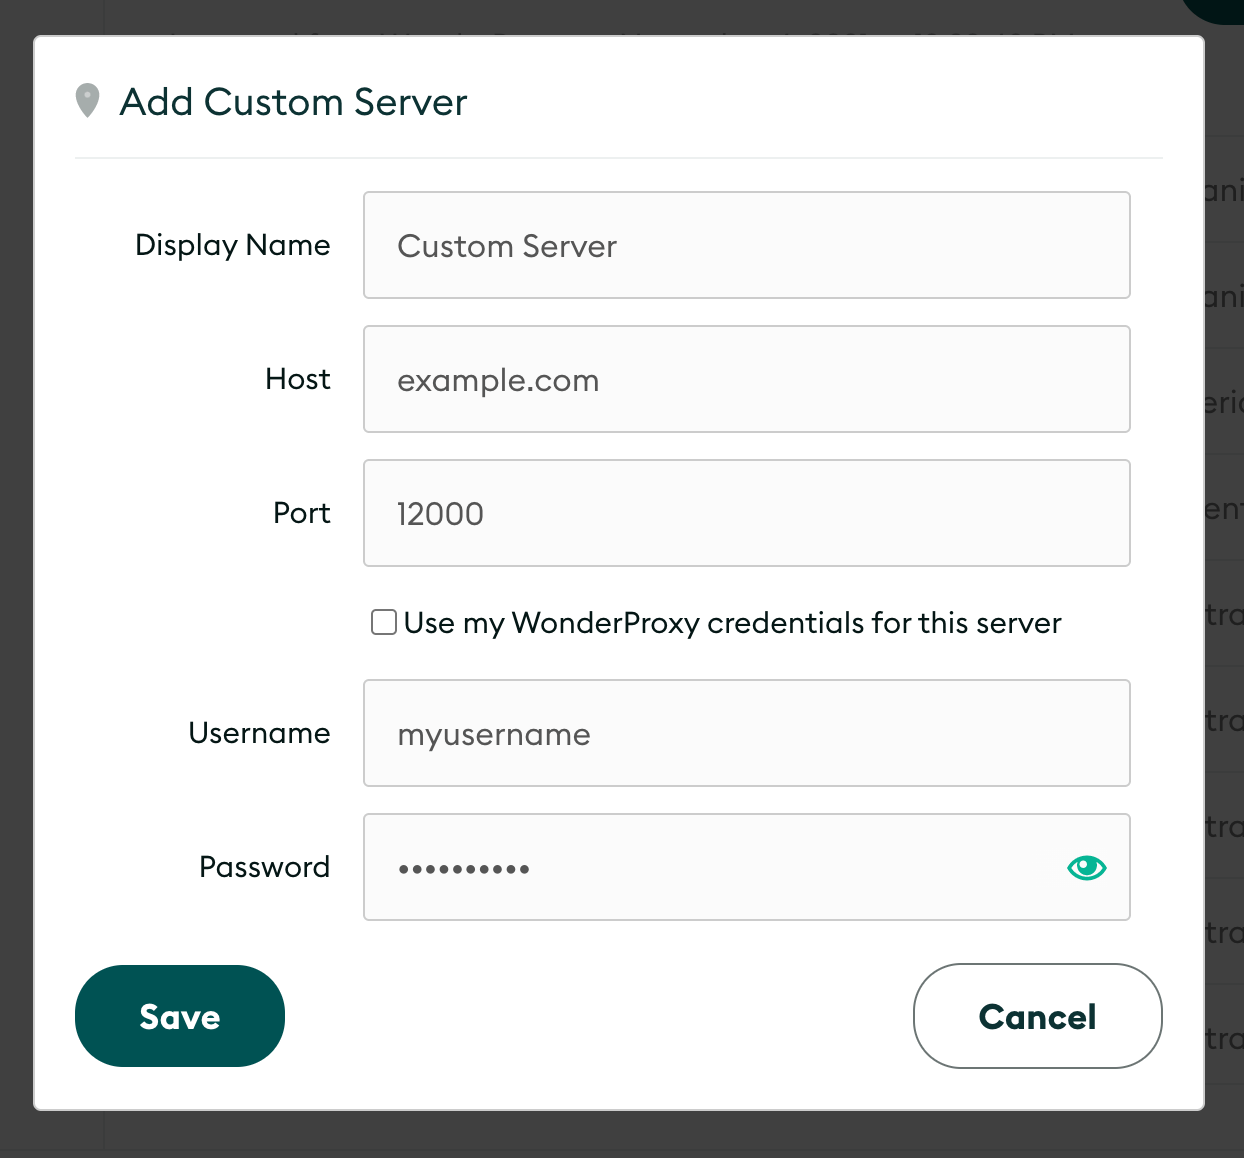 Add Custom Server modal with custom credentials